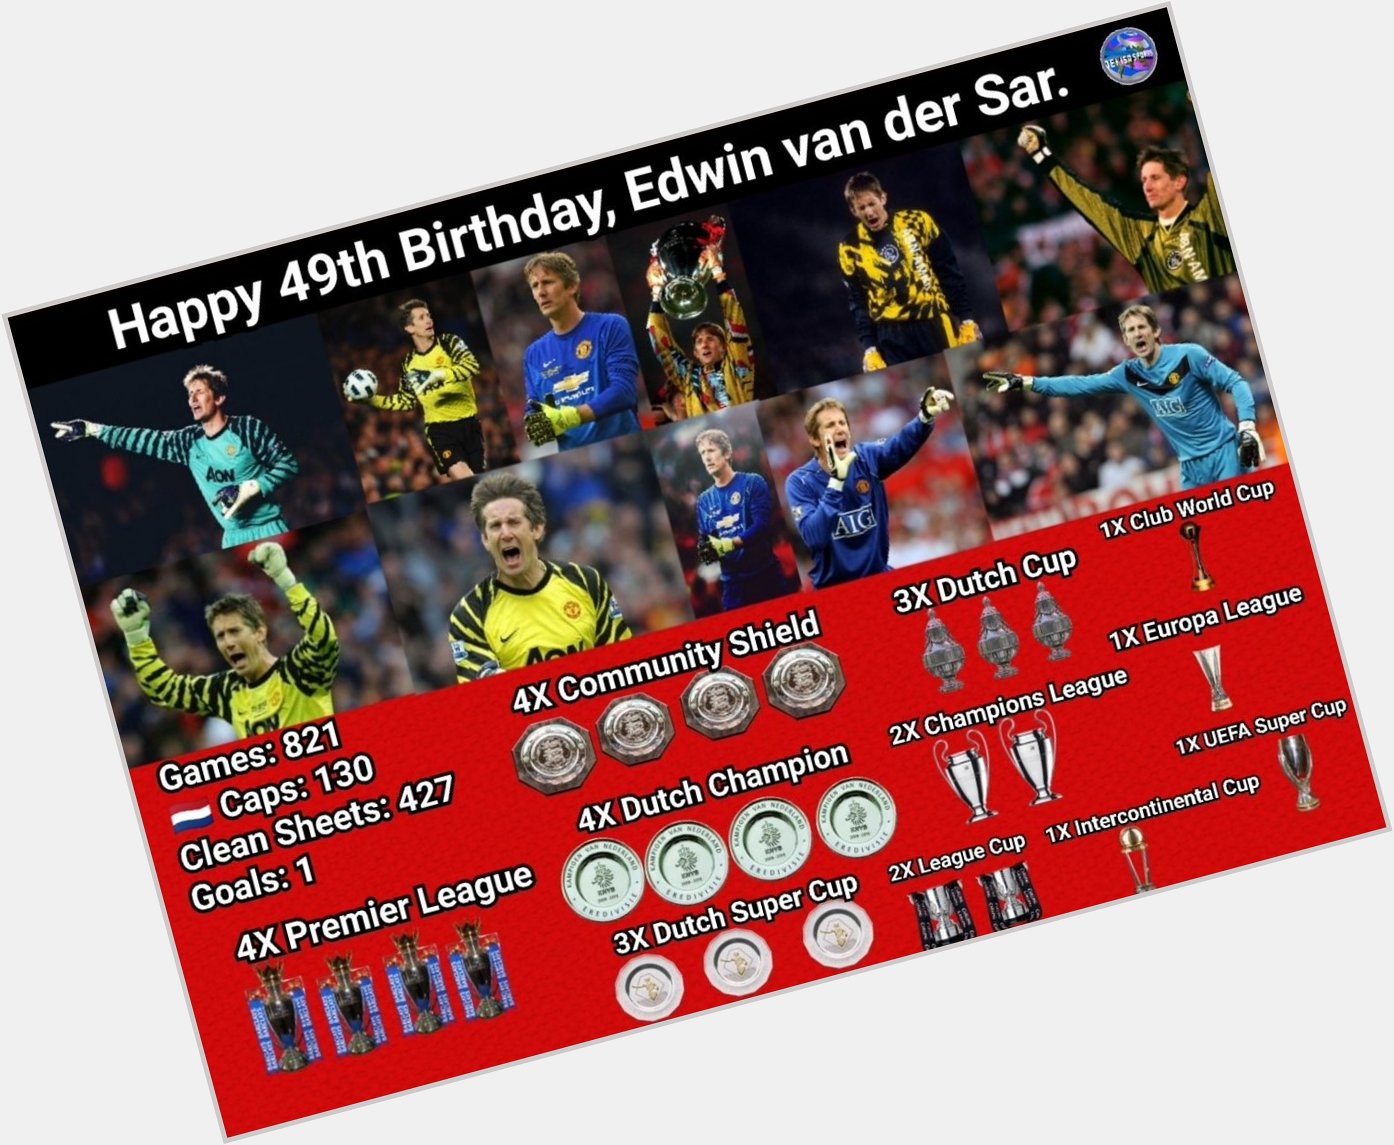 Happy 49th Birthday, Edwin van der Sar. 